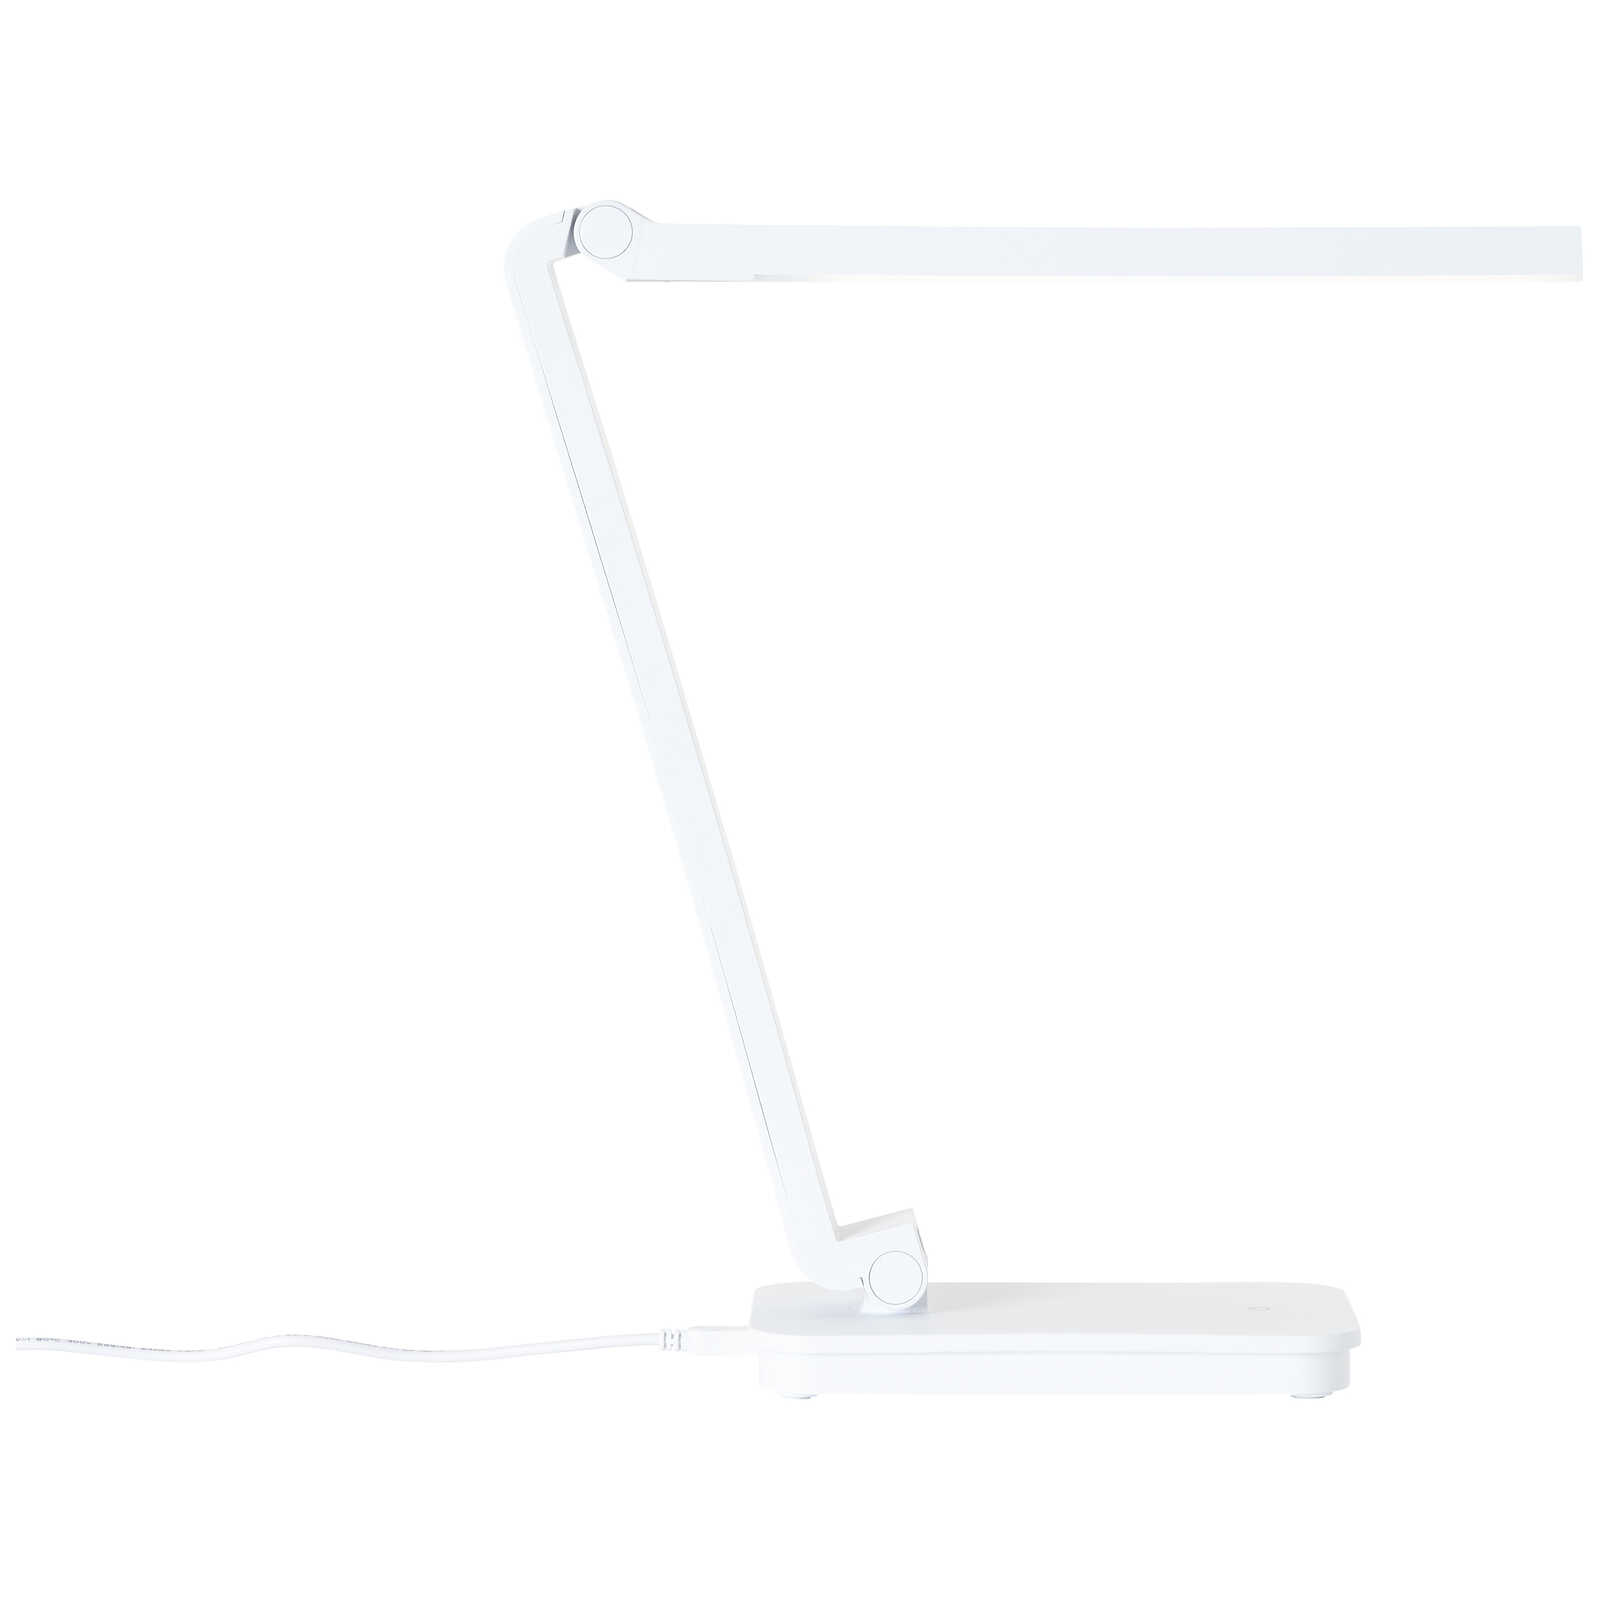             Kunststof tafellamp - Romy 1 - Wit
        